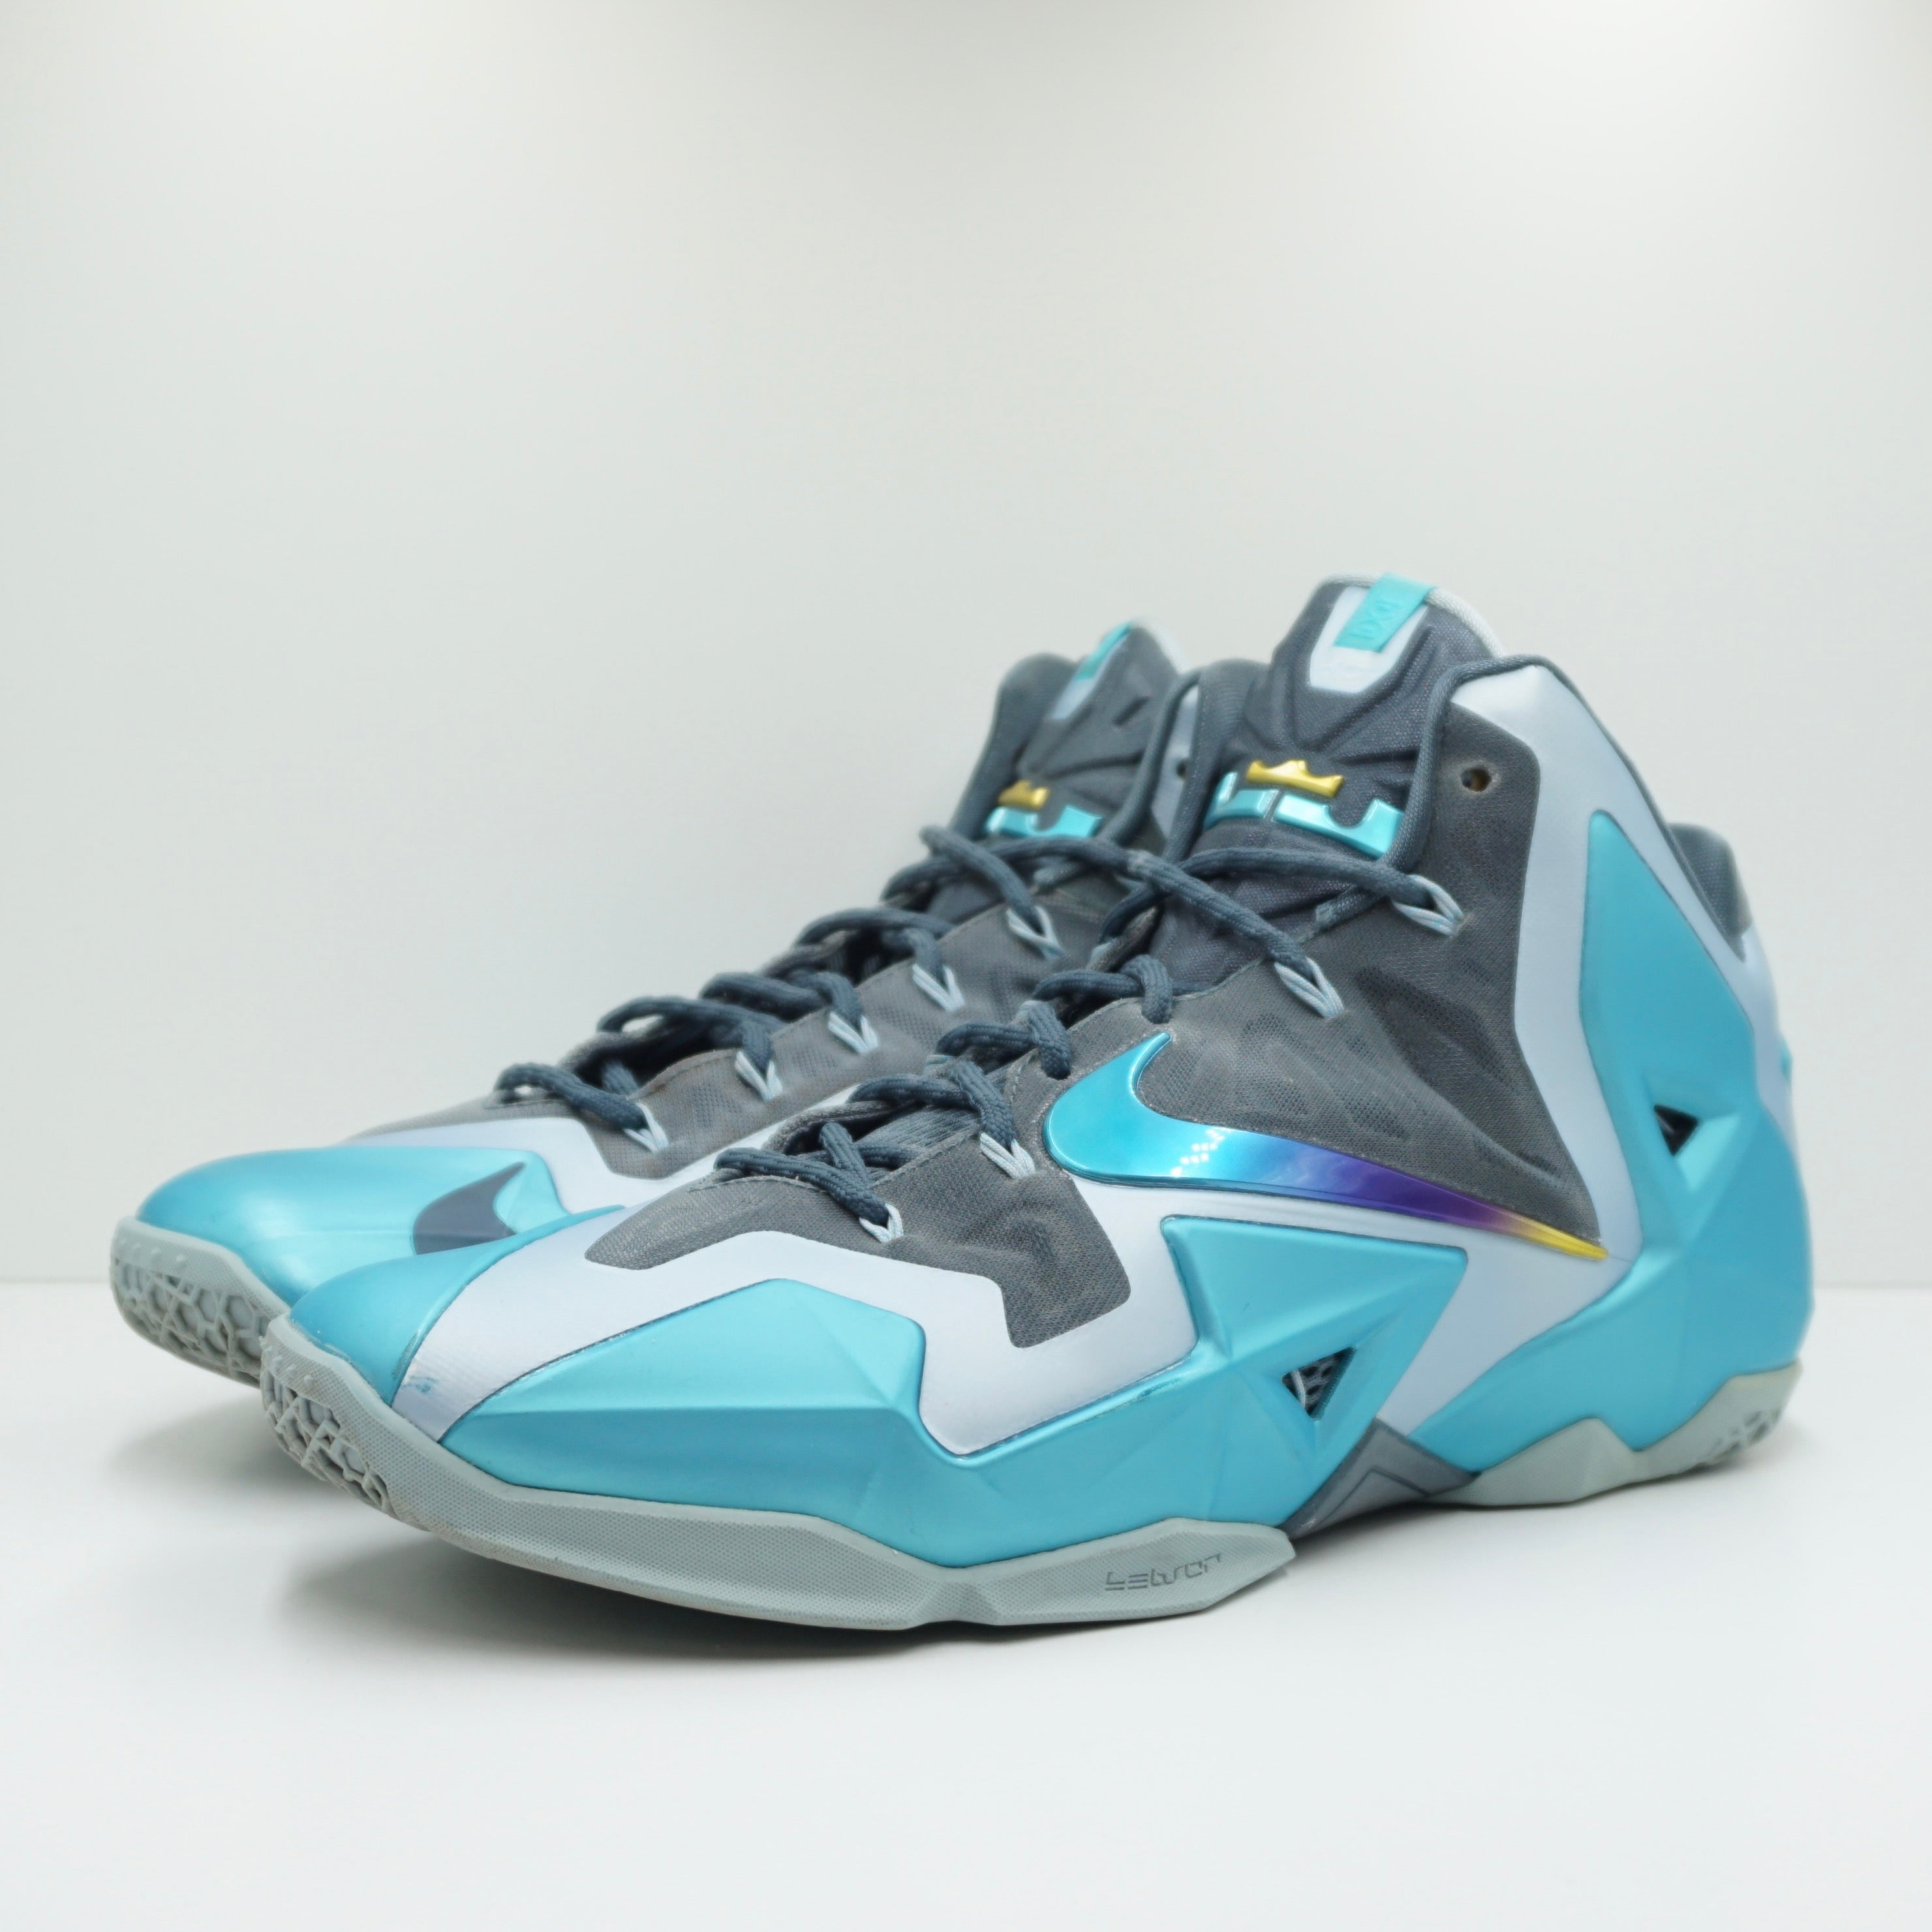 Nike LeBron 11 Gamma Blue